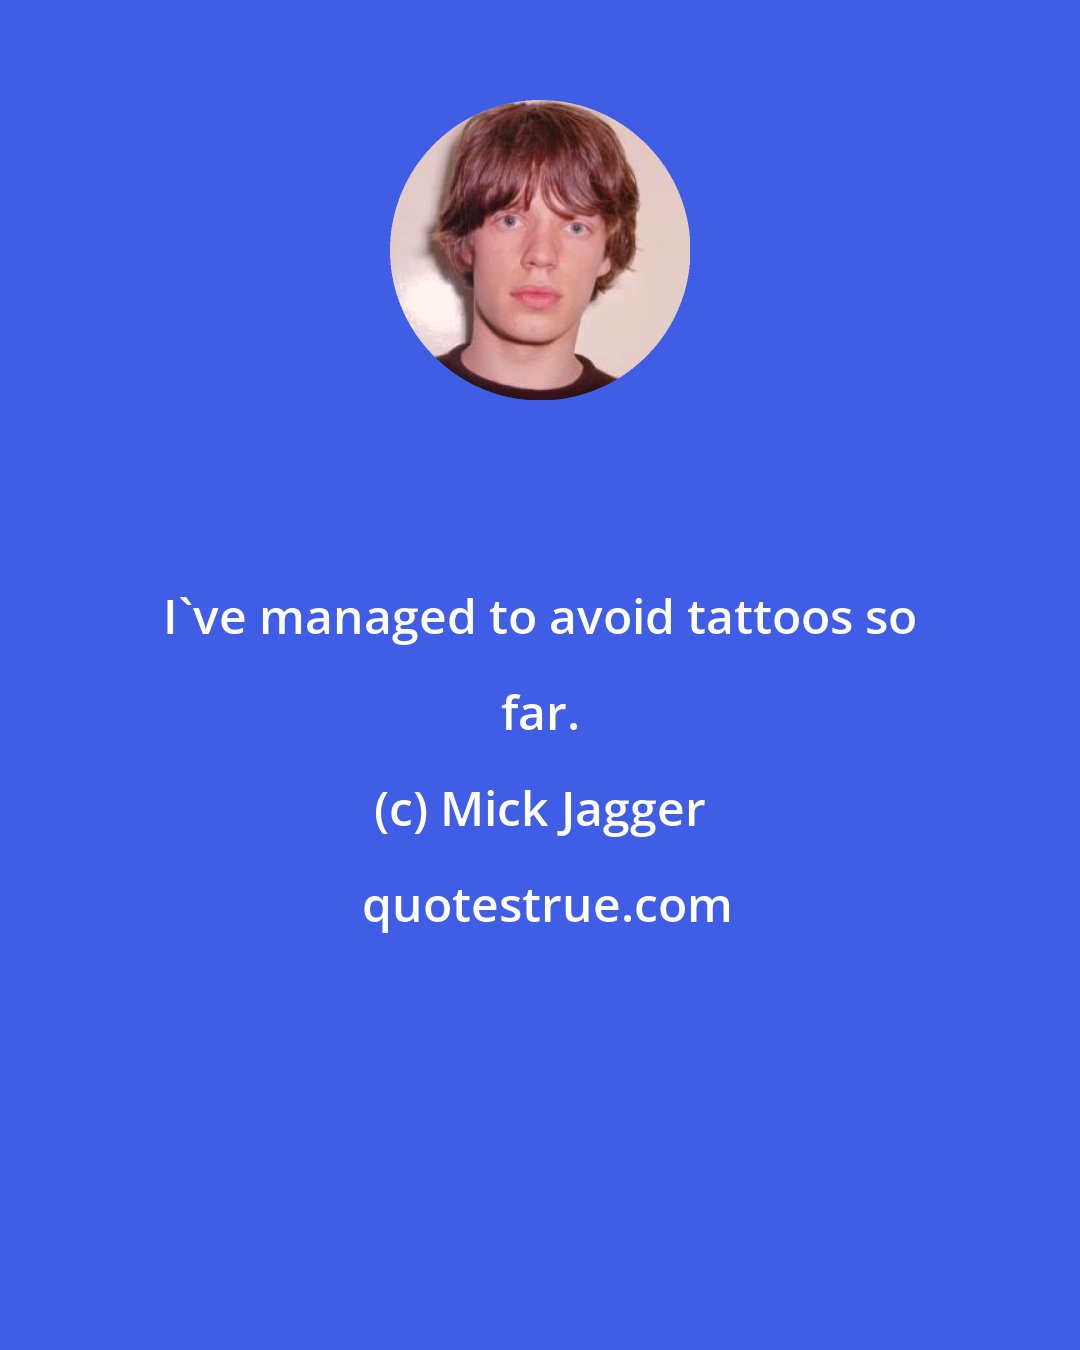 Mick Jagger: I've managed to avoid tattoos so far.